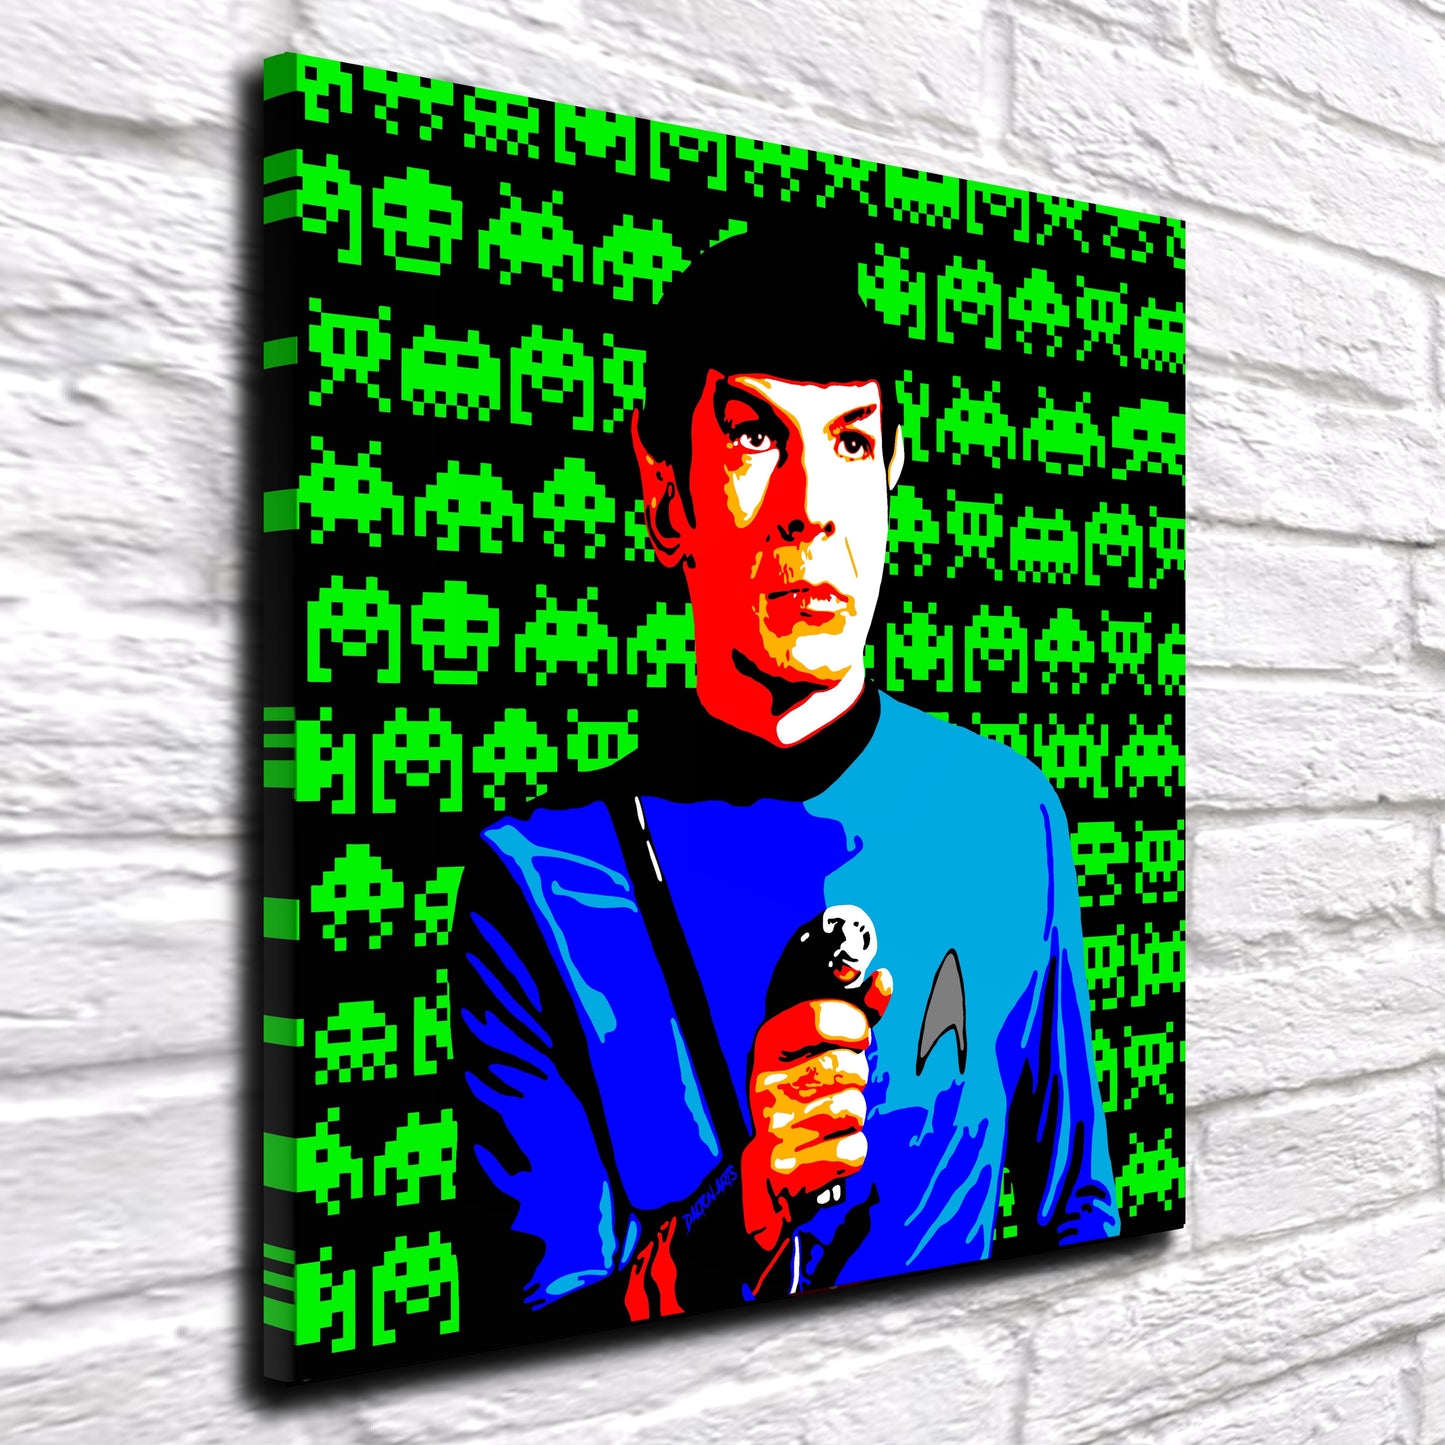 Dr. Spock Pop Art